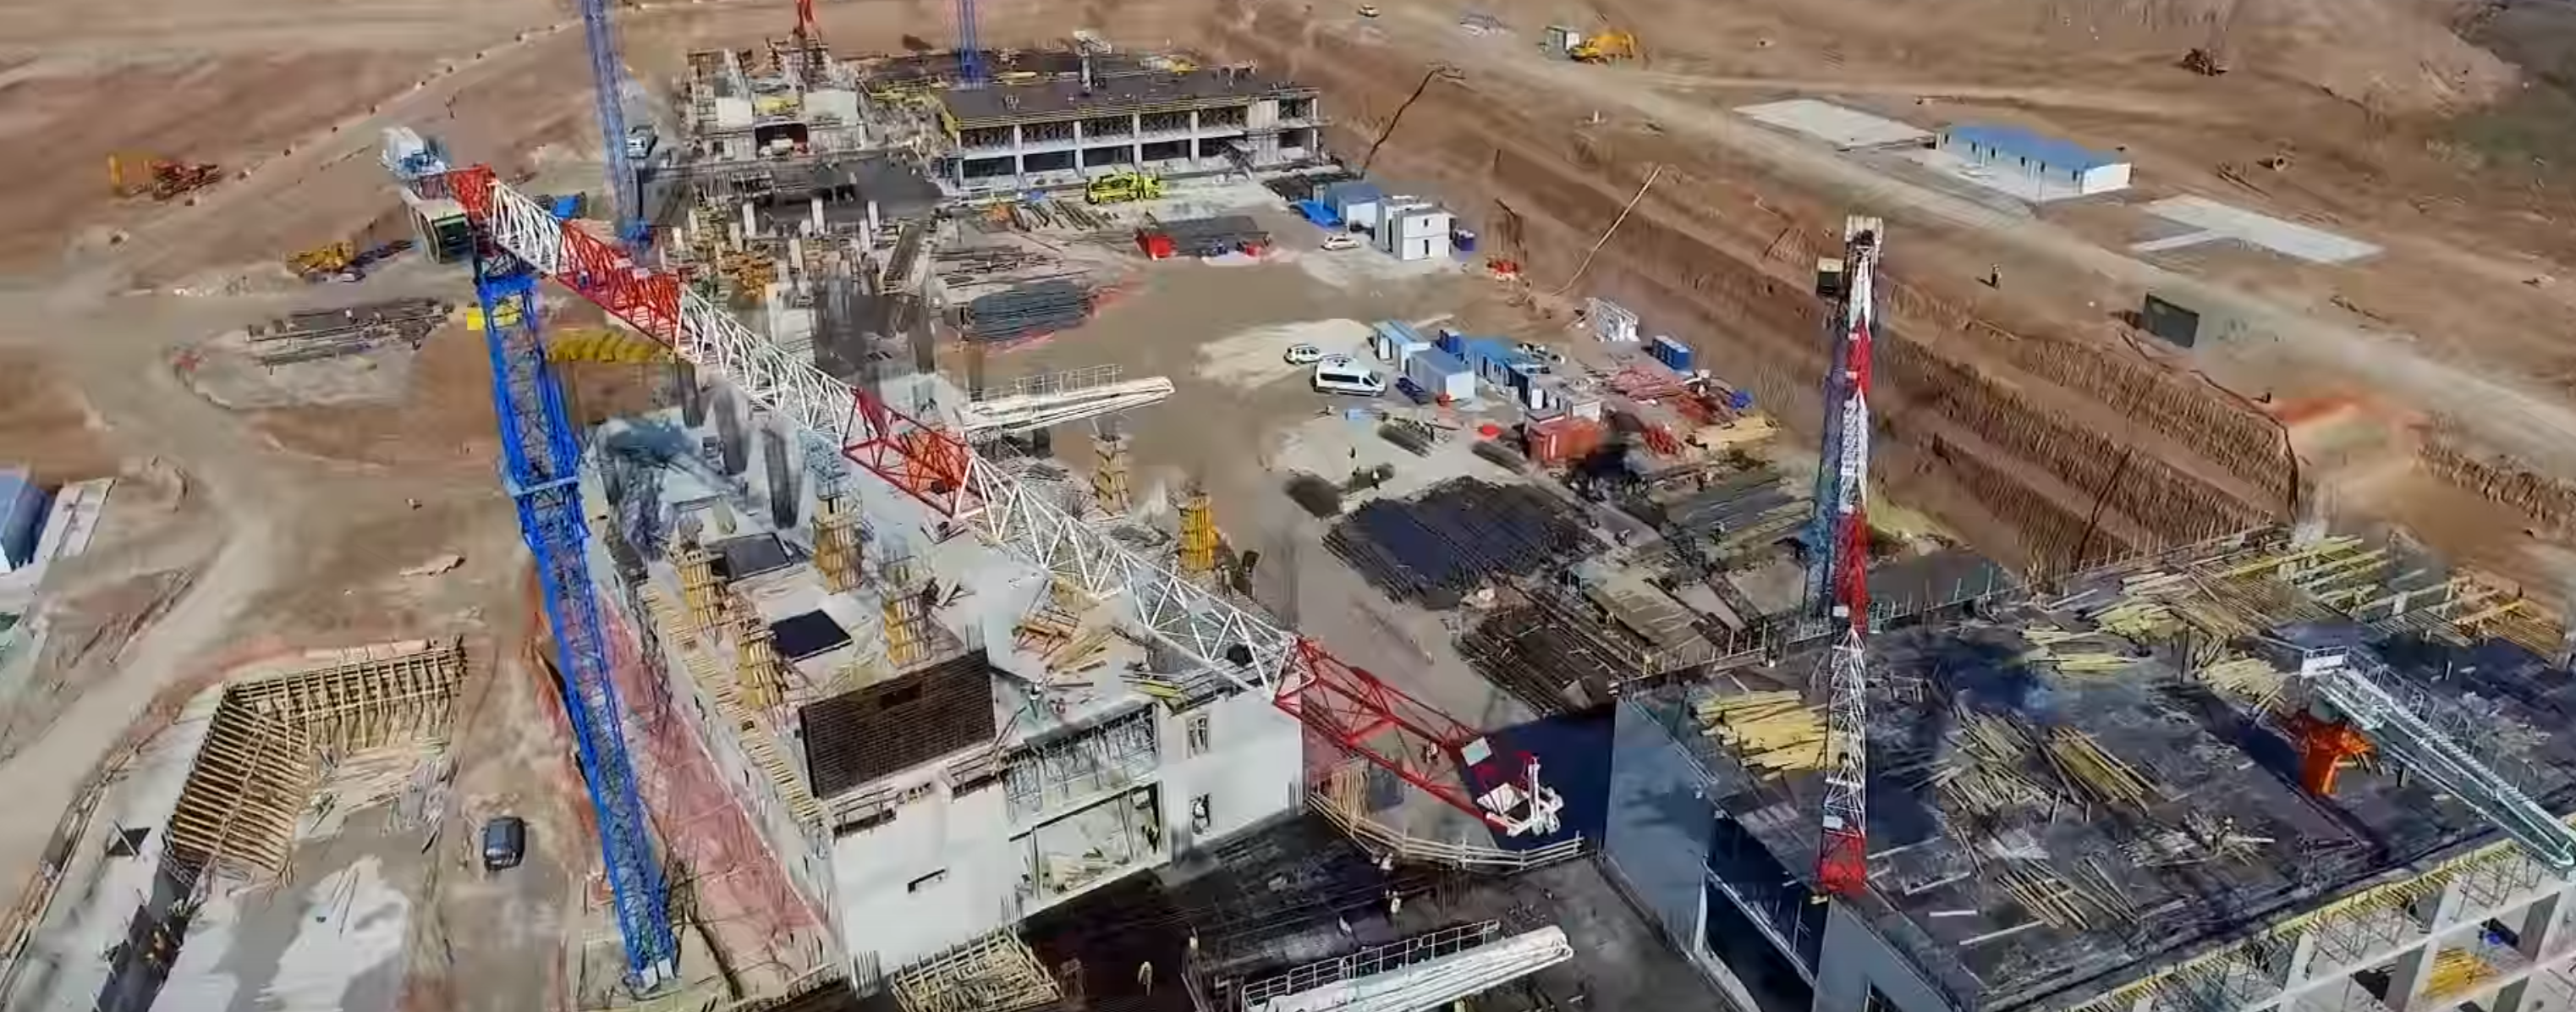 CraneMag: AKEM Group to erect 36 Raimondi cranes at Ankara jobsite by June 2018